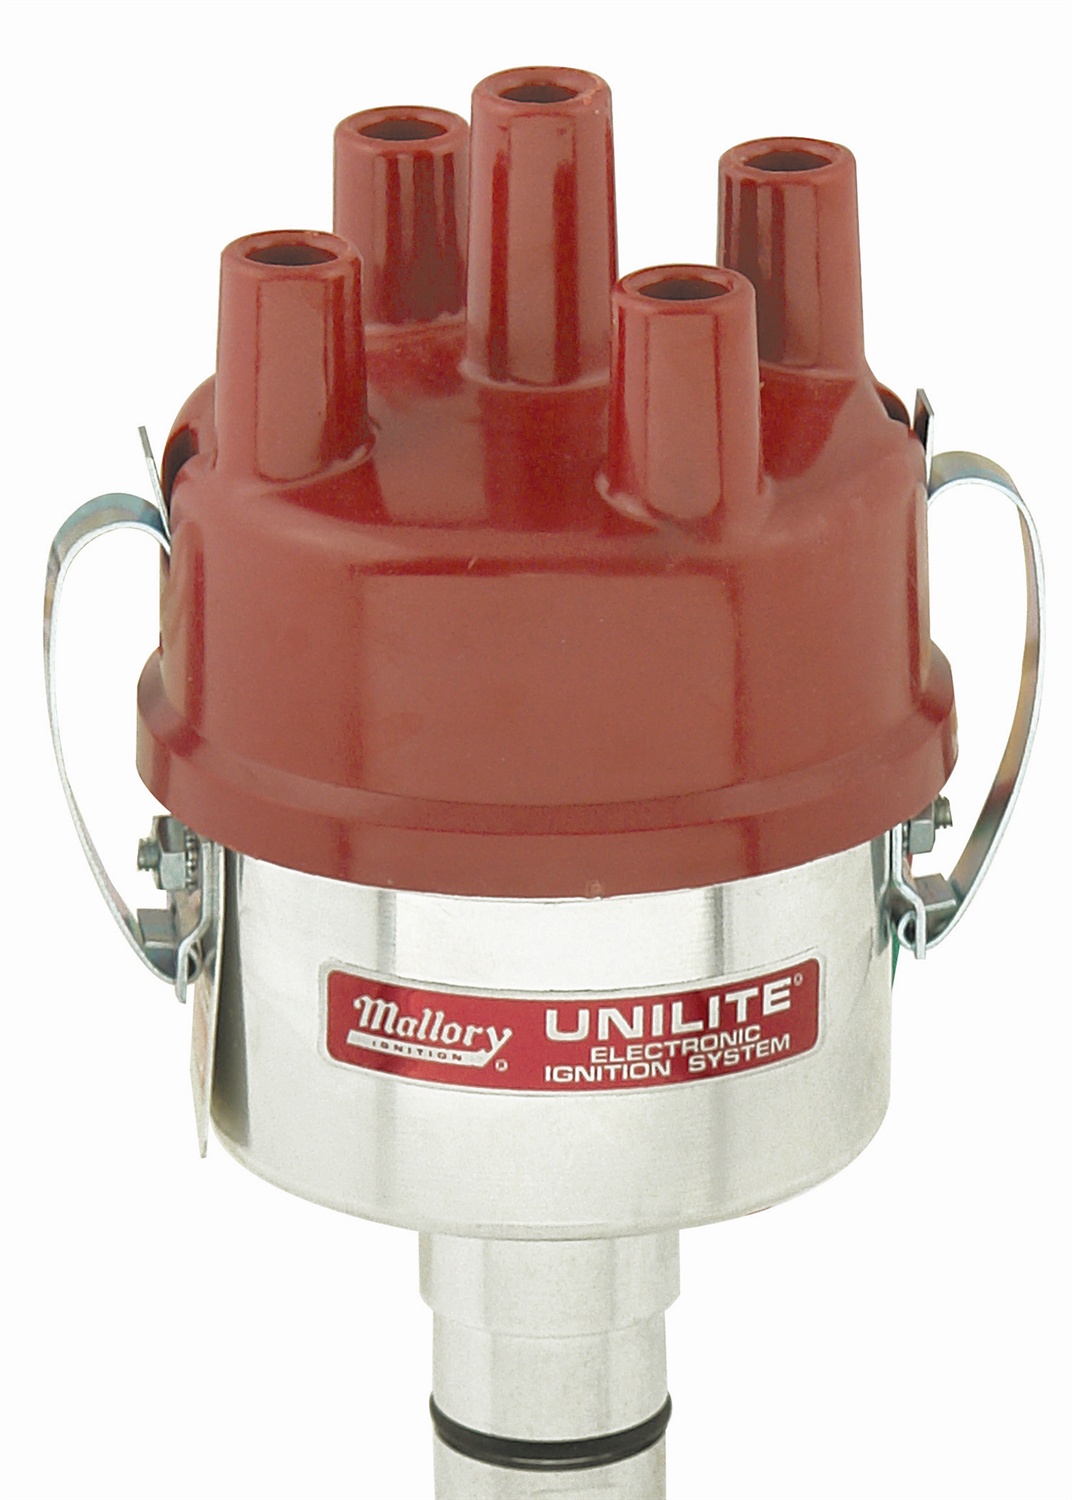 Mallory Mallory 4532001 Unilite Electronic Ignition Distributor Series 45